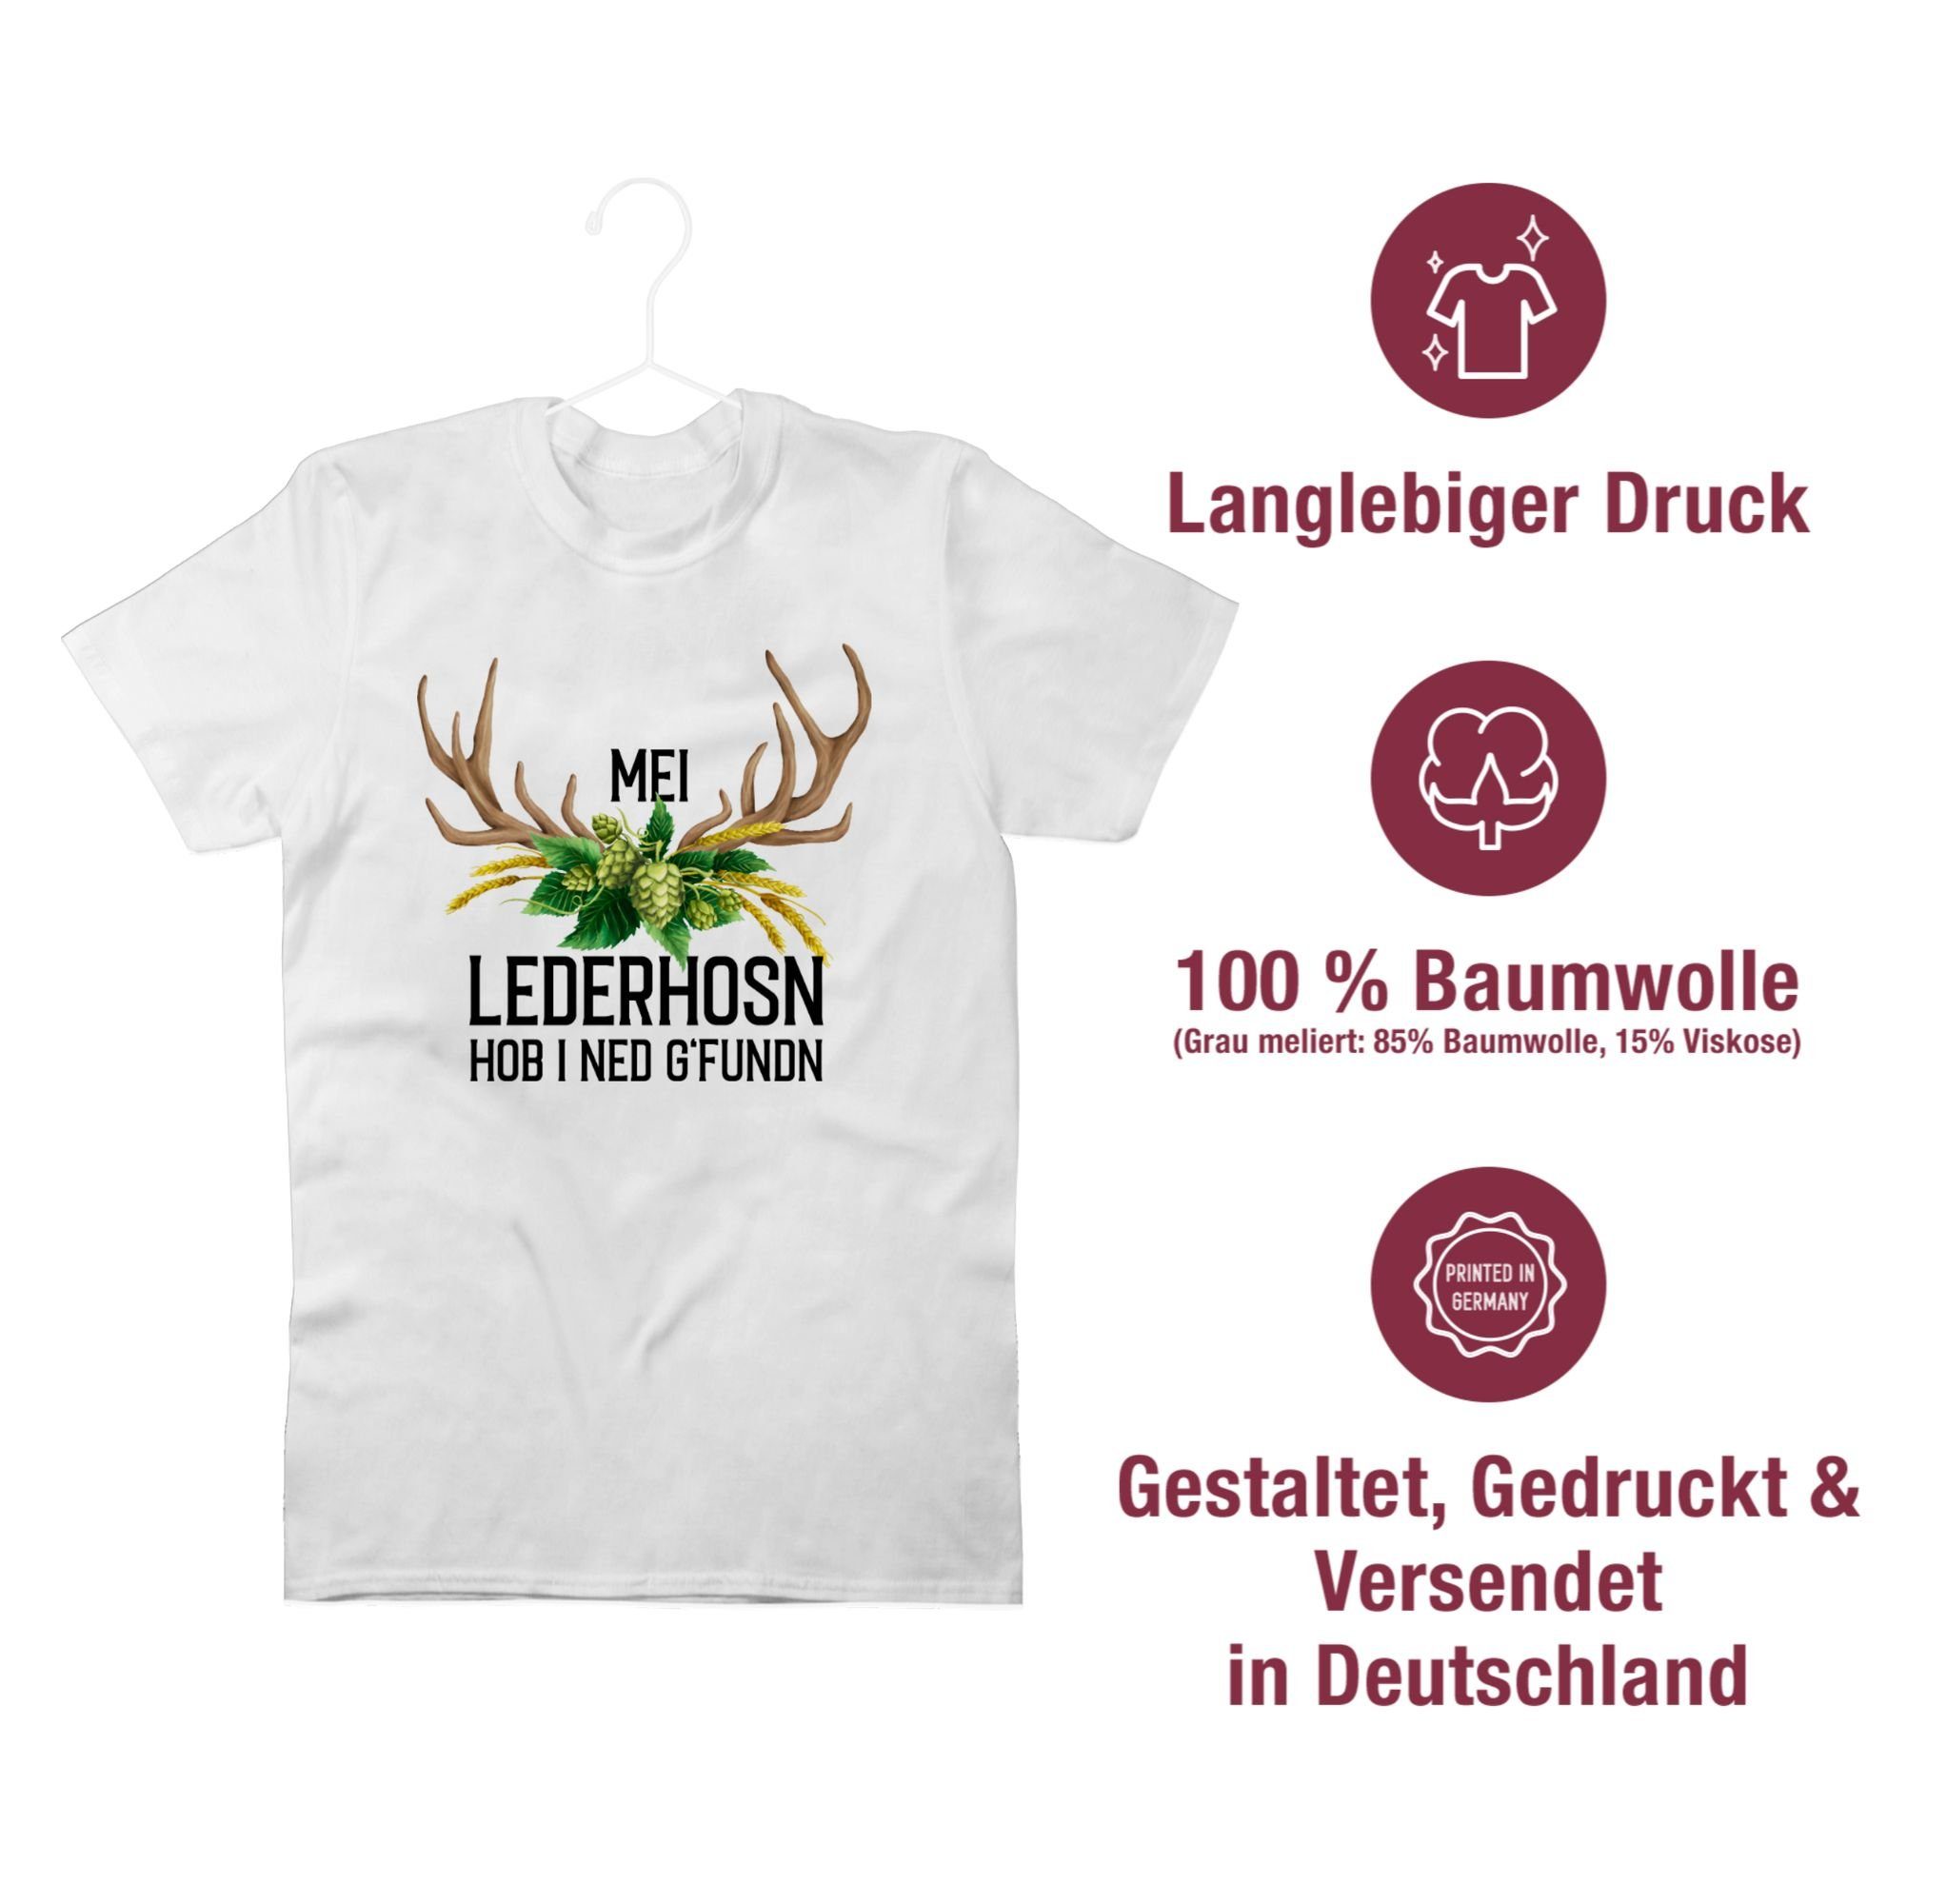 Oktoberfest Herren Weizen für Hirschgeweih i Lederhosn ned Mode - hob und 02 Weiß Shirtracer g'fundn Mei Hopfen T-Shirt